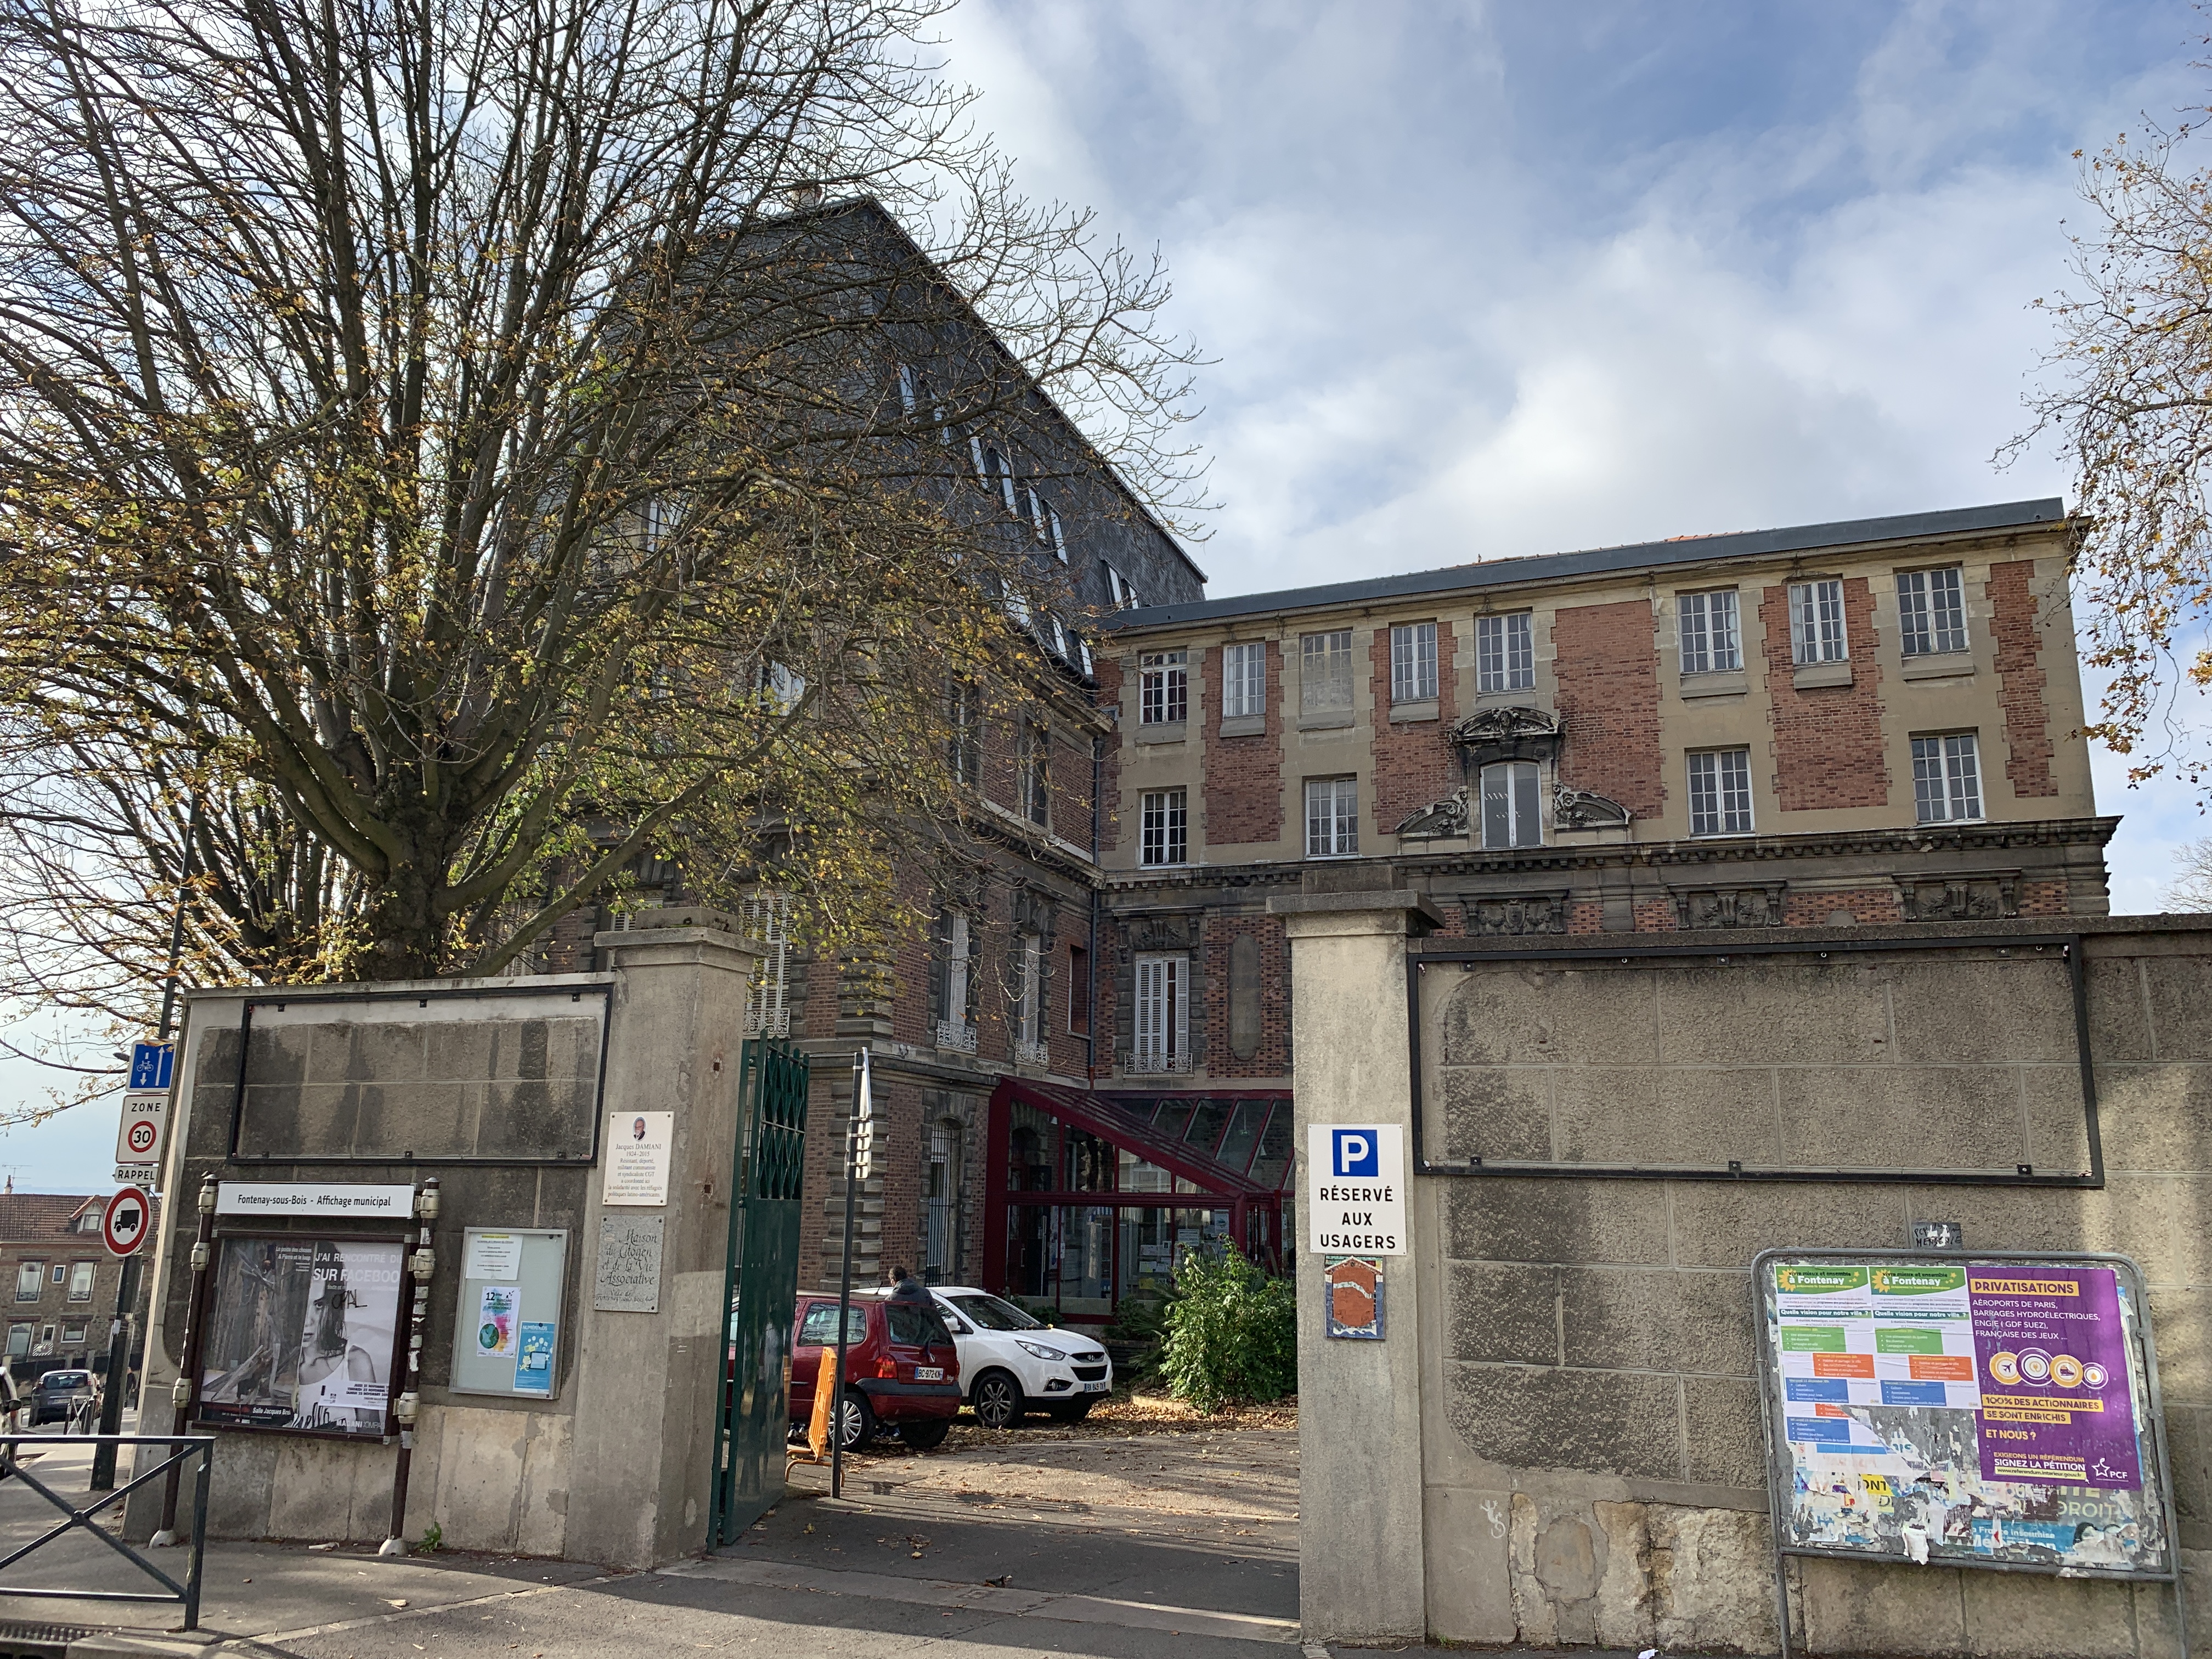 File:Distributeur Boissons Friandises Gare Val Fontenay Fontenay Bois 2.jpg  - Wikimedia Commons